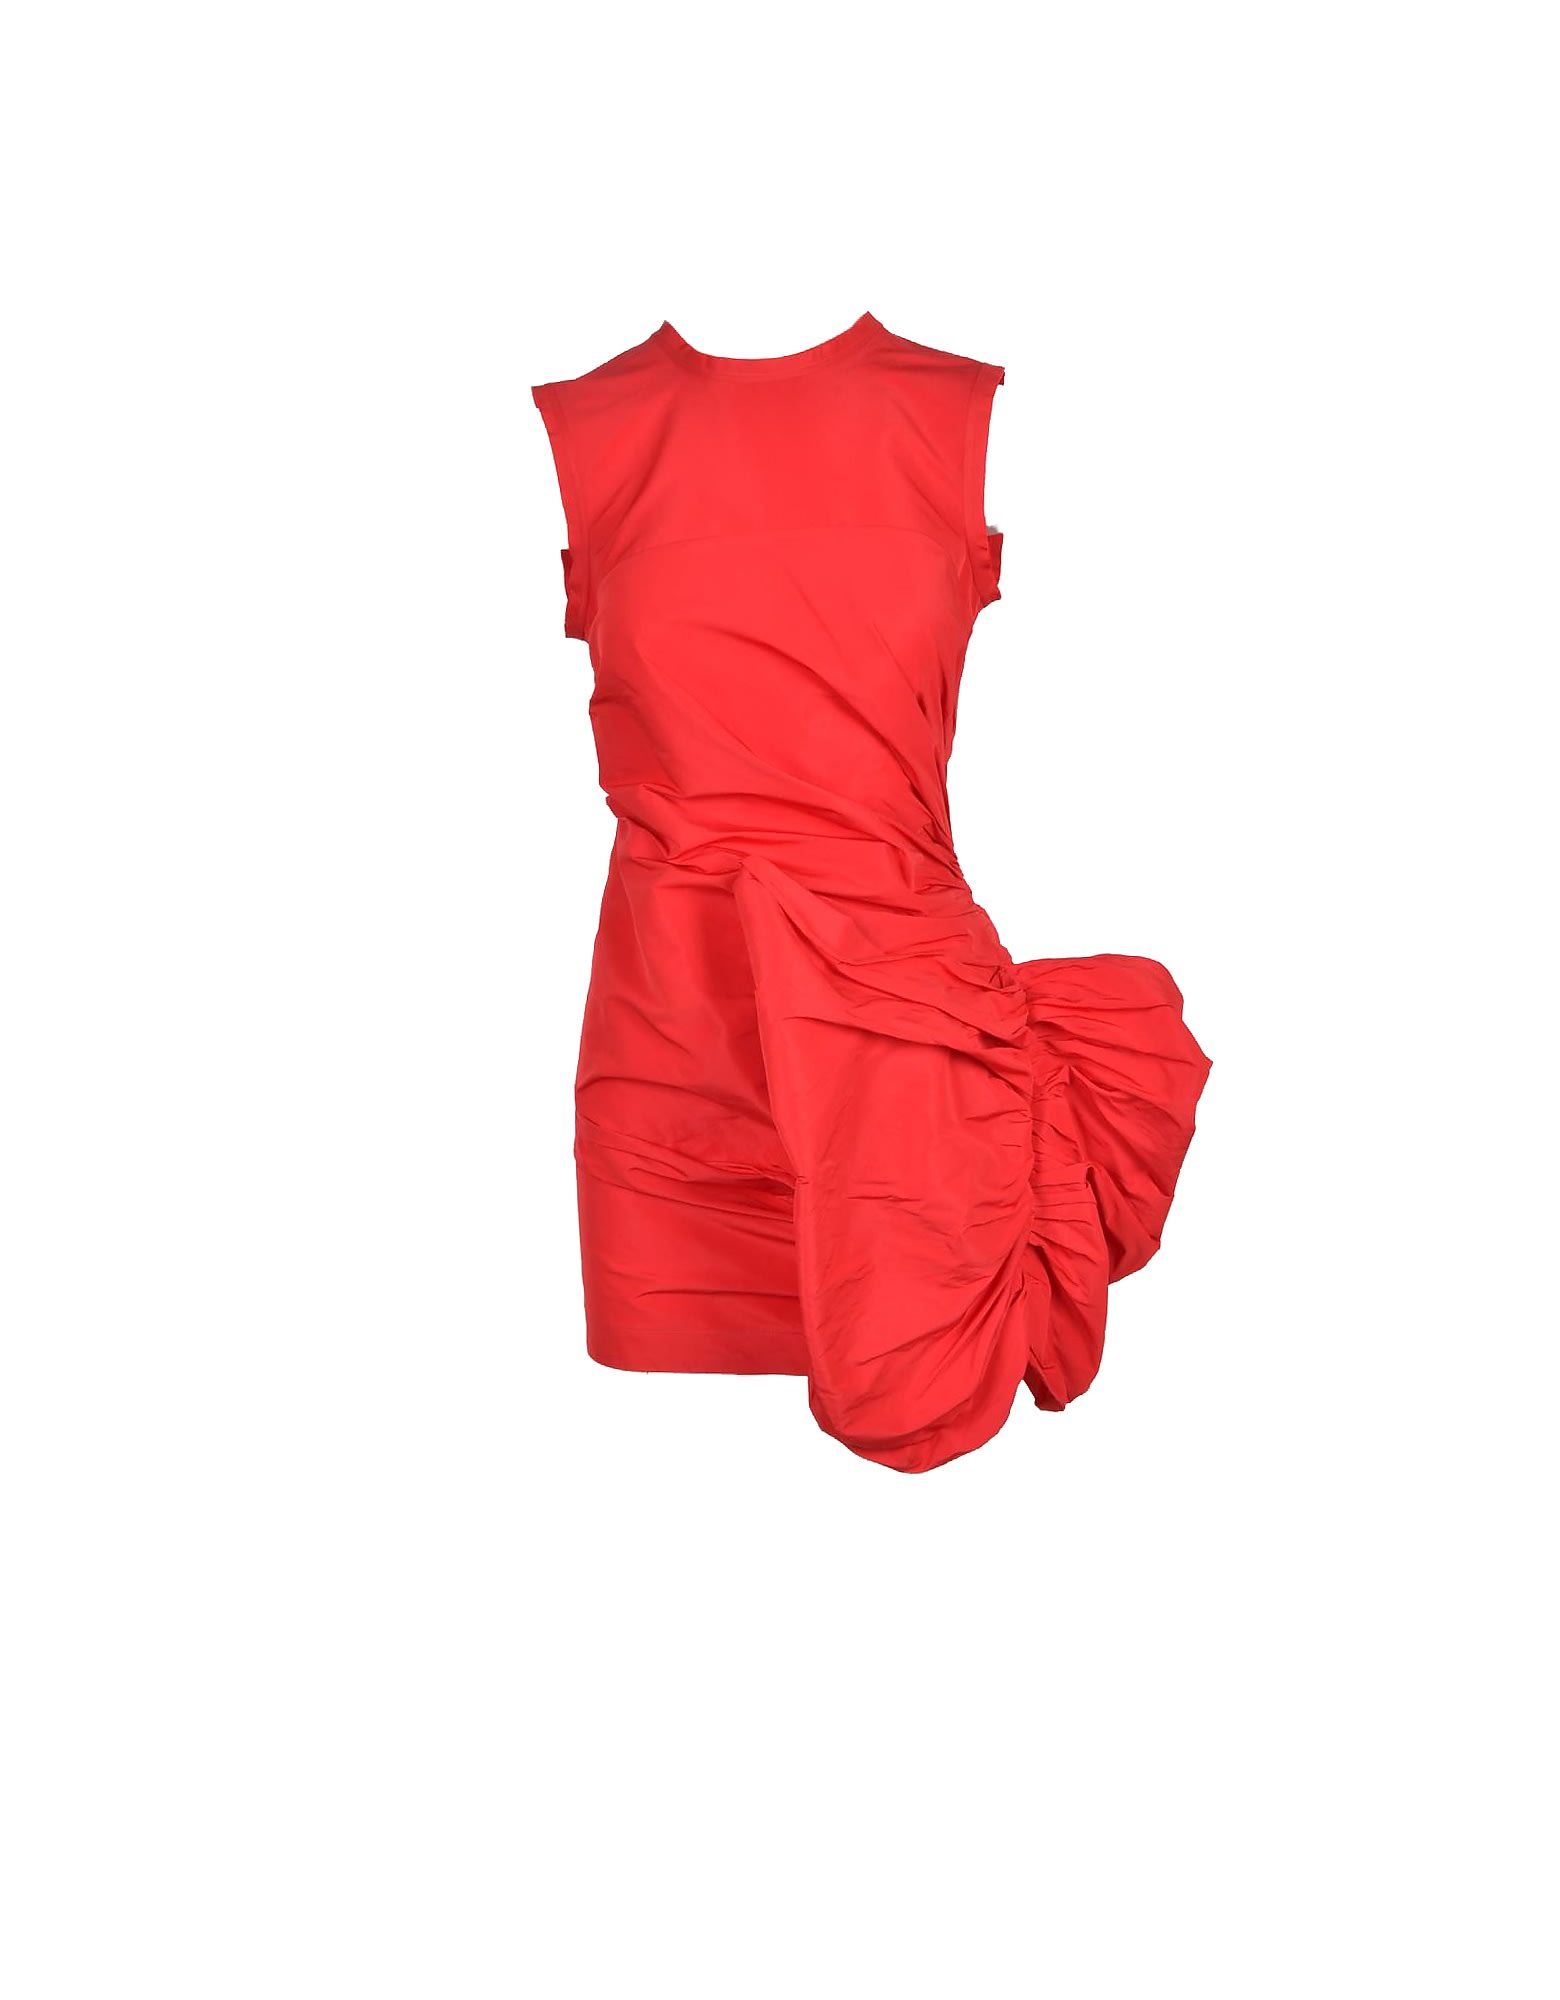 N.21 N°21 Womens Red Dress